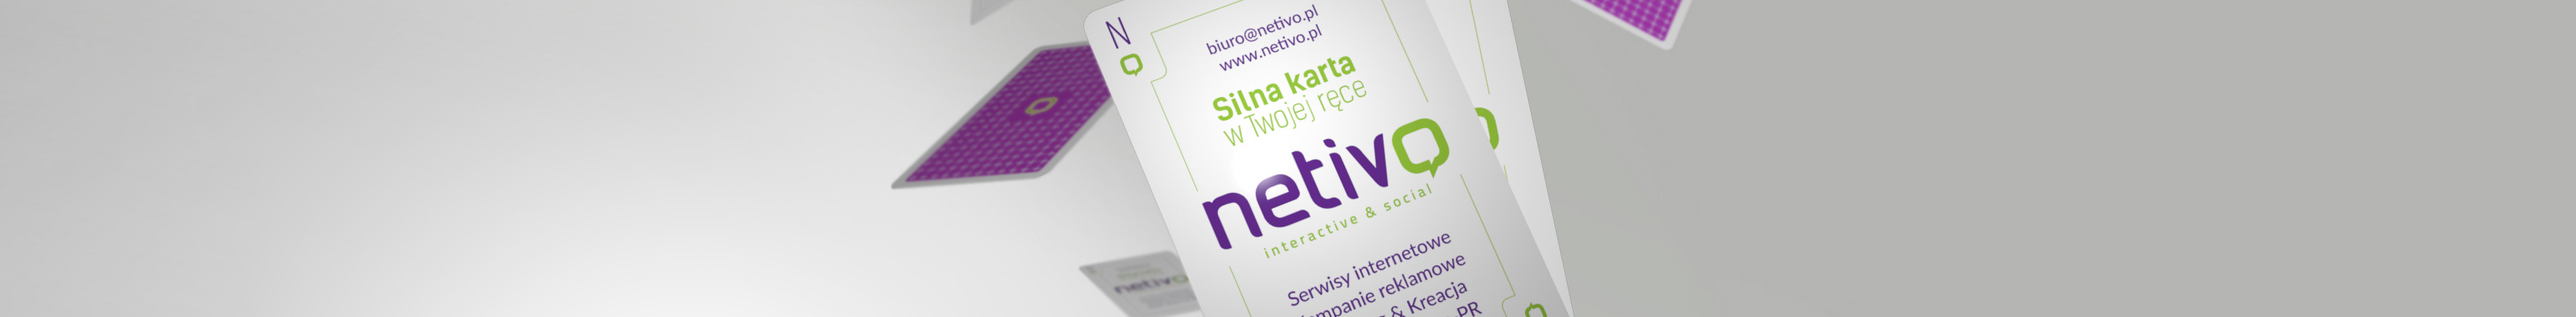 Netivo pl's profile banner